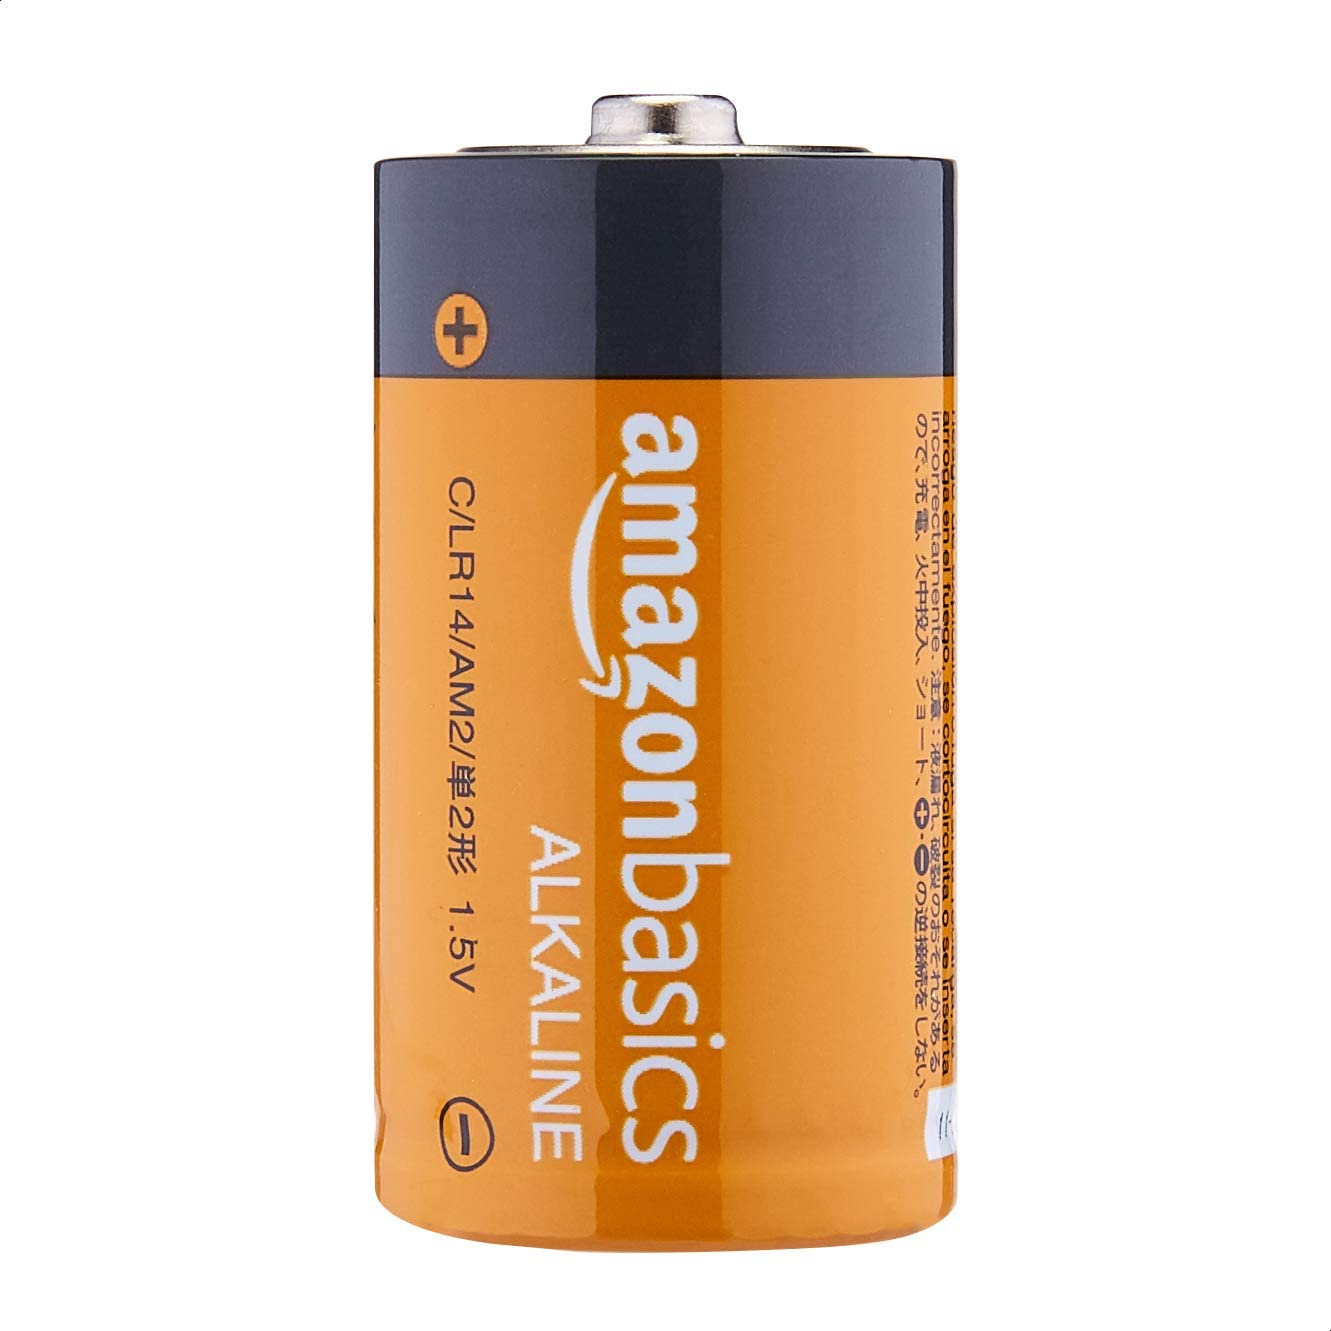 Amazon Basics 5 Pack C Cell All-Purpose Alkaline Batteries, 5-Year Shelf Life (LNC)